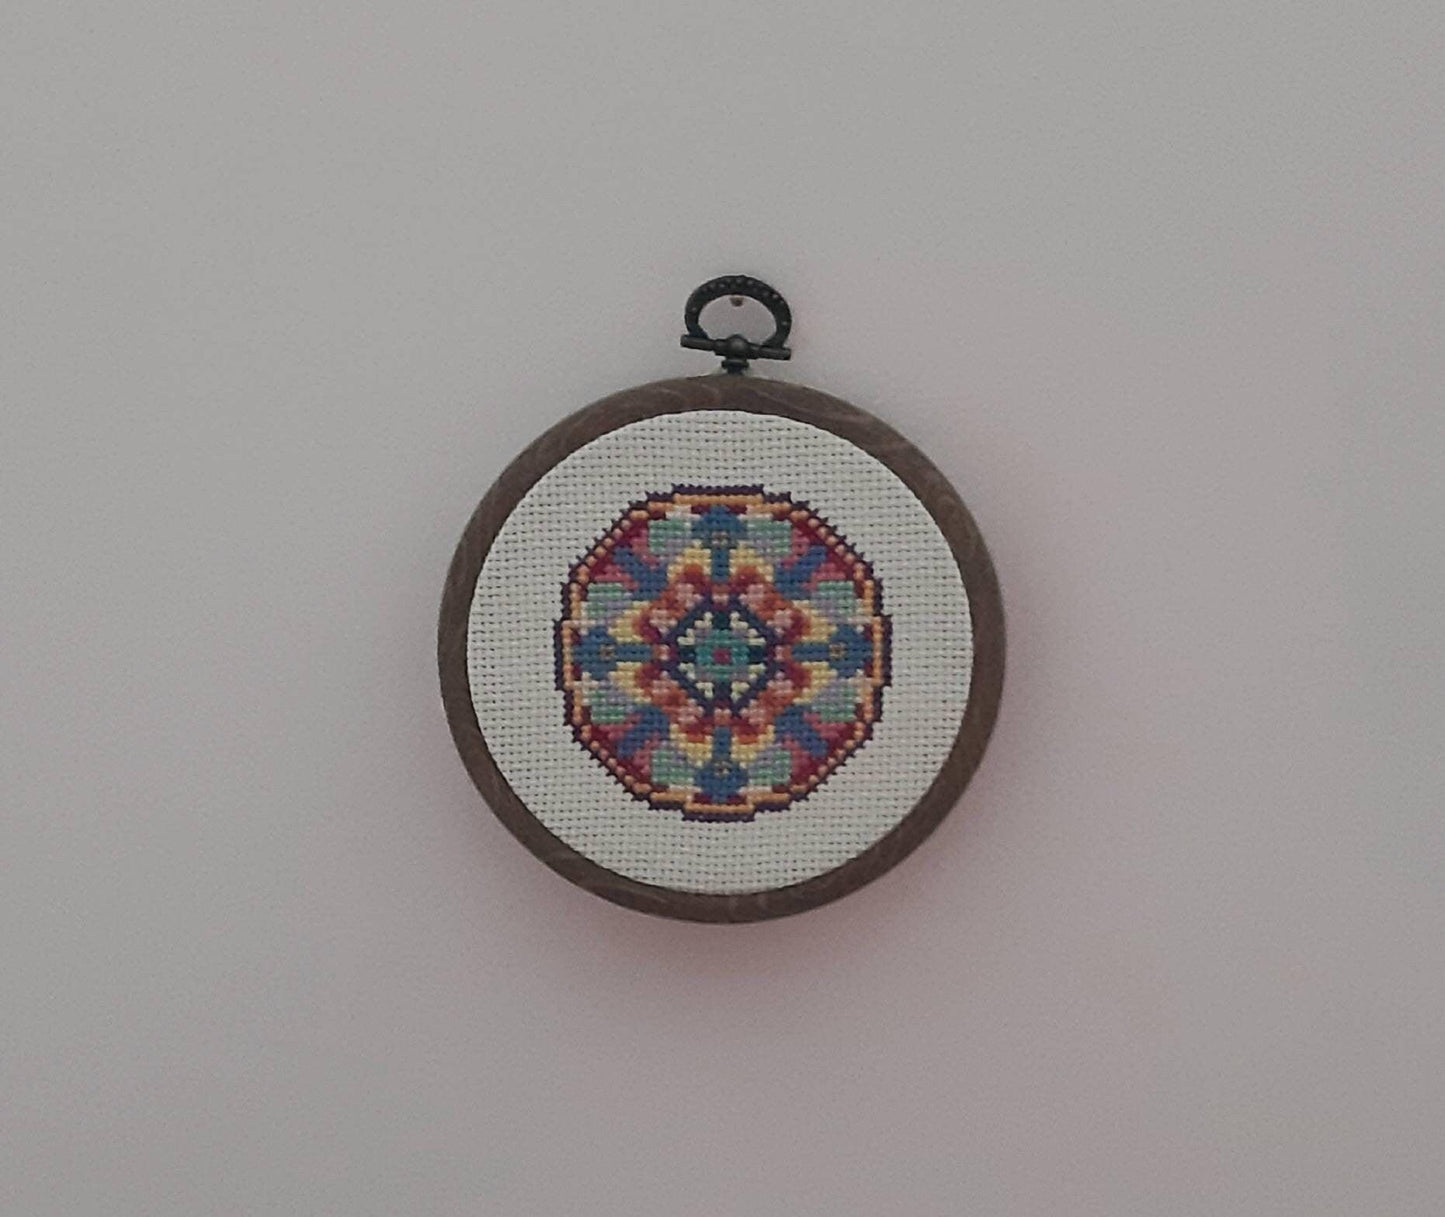 Mandala design, completed cross stitch